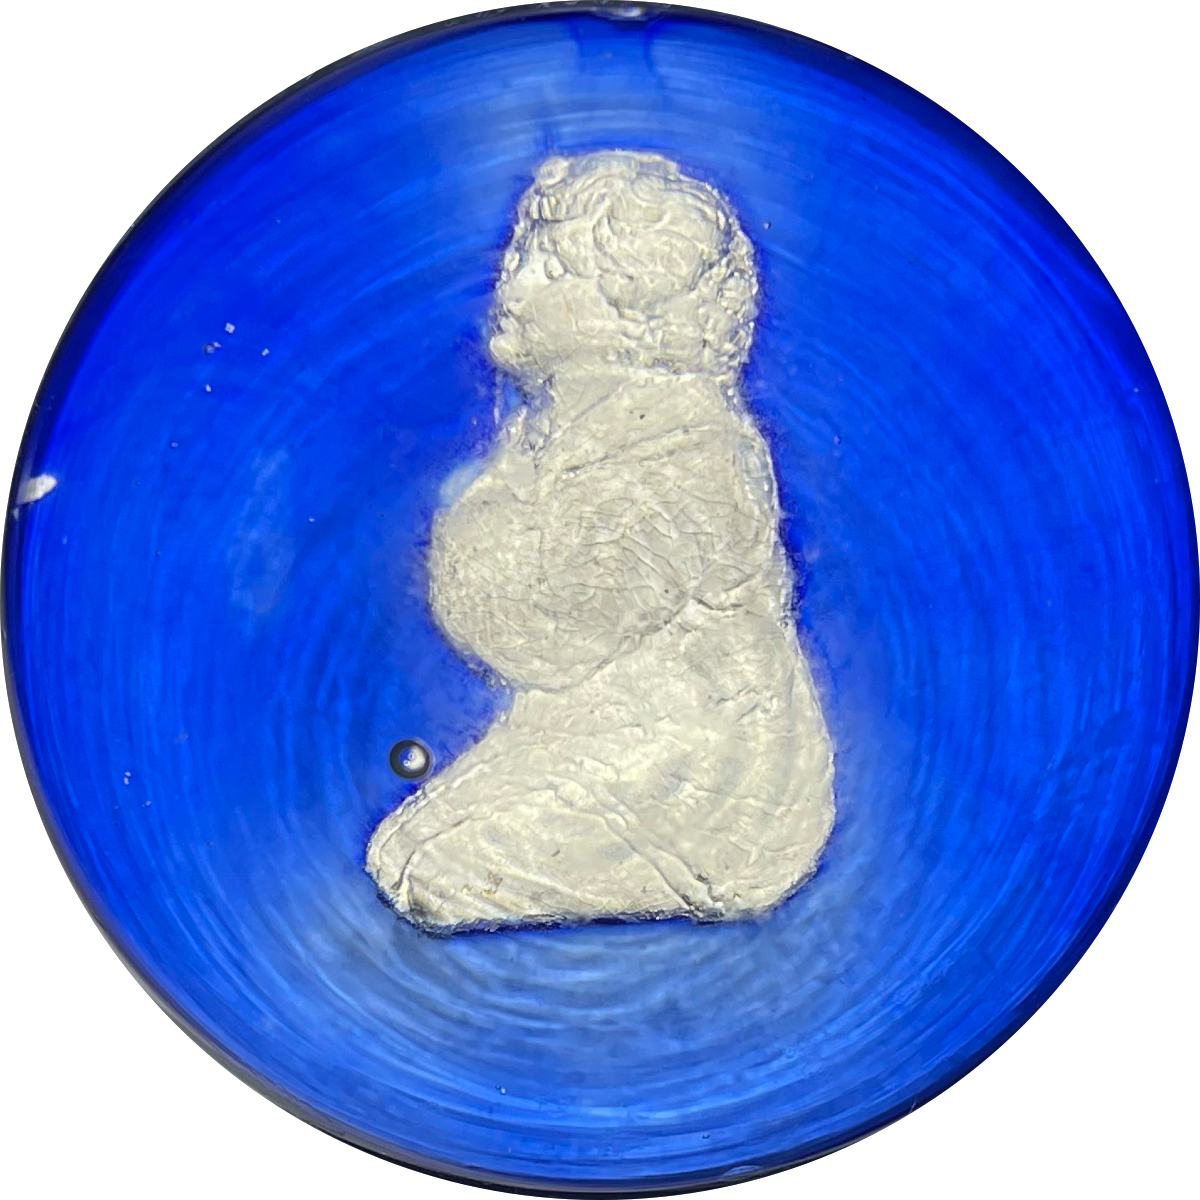 Antique European Sulphide Praying Figure on Opaque Blue Ground